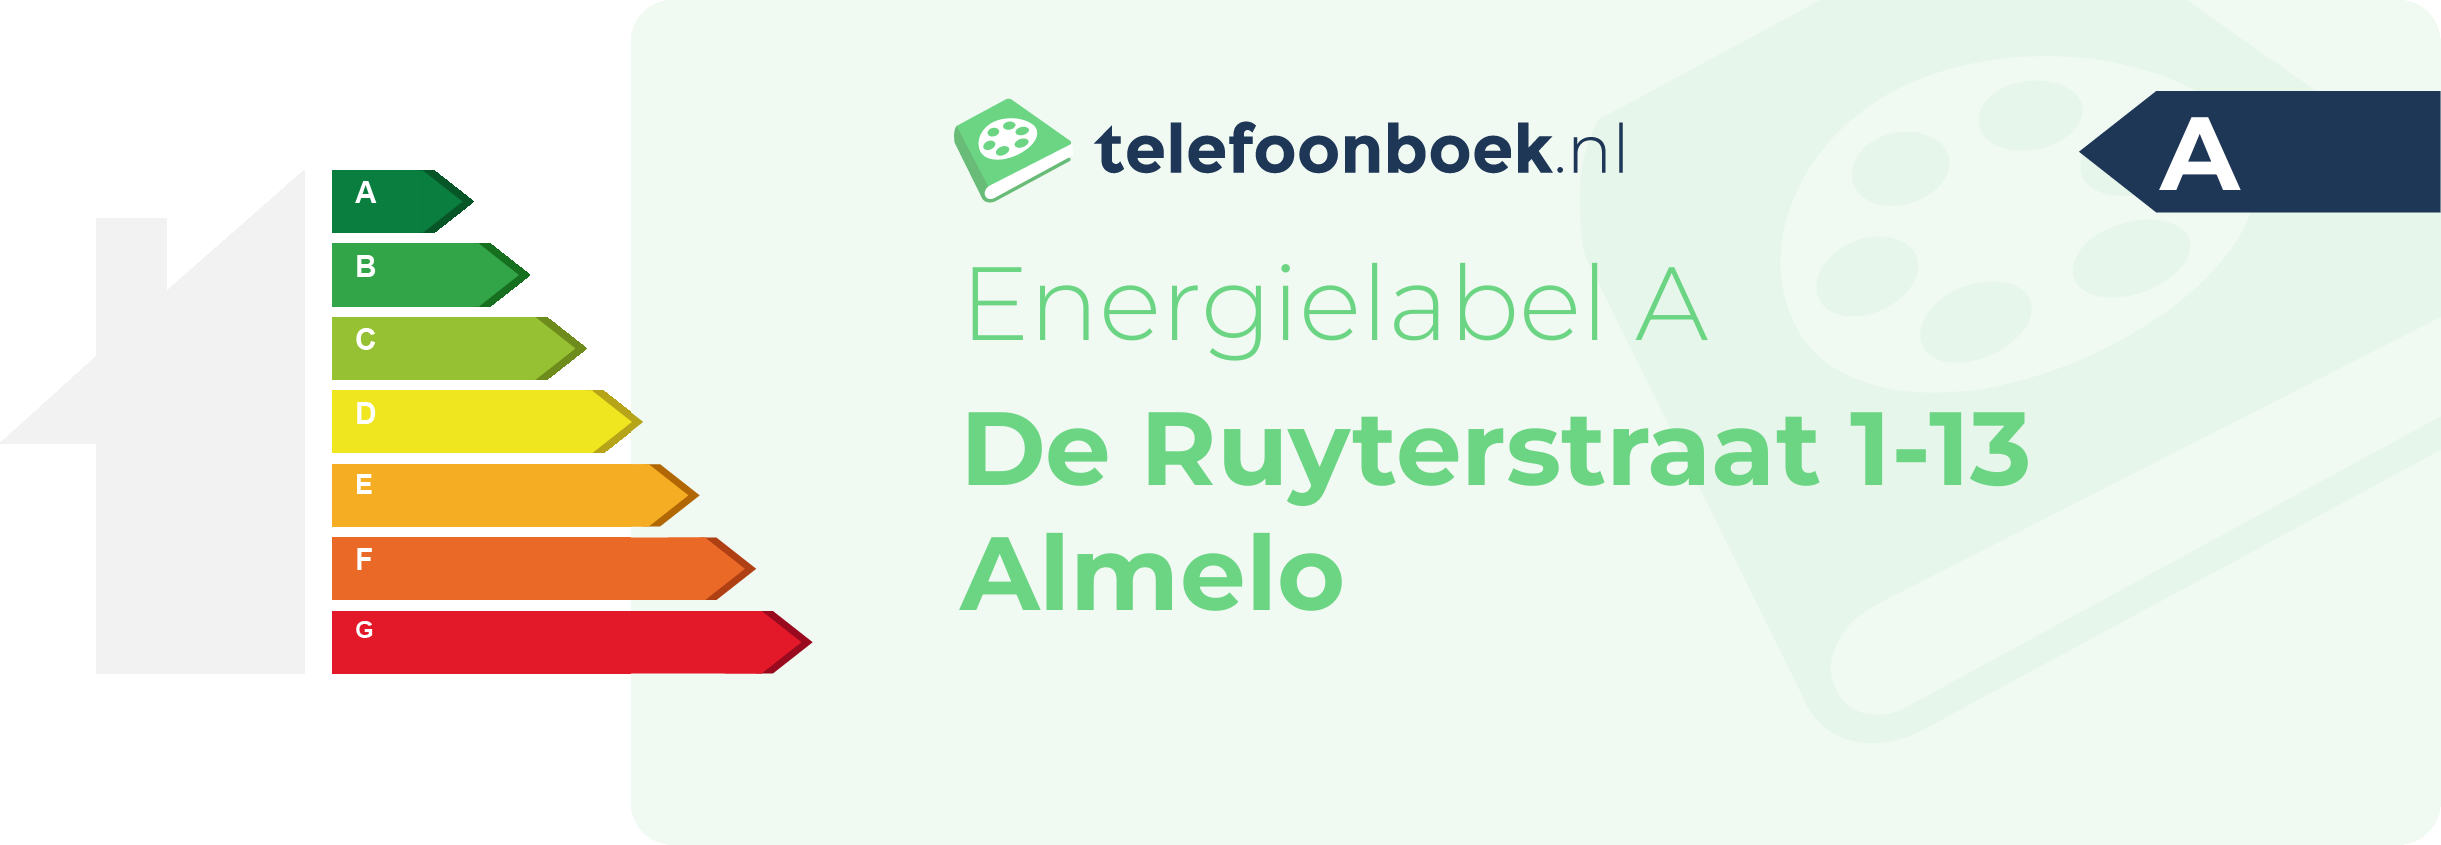 Energielabel De Ruyterstraat 1-13 Almelo